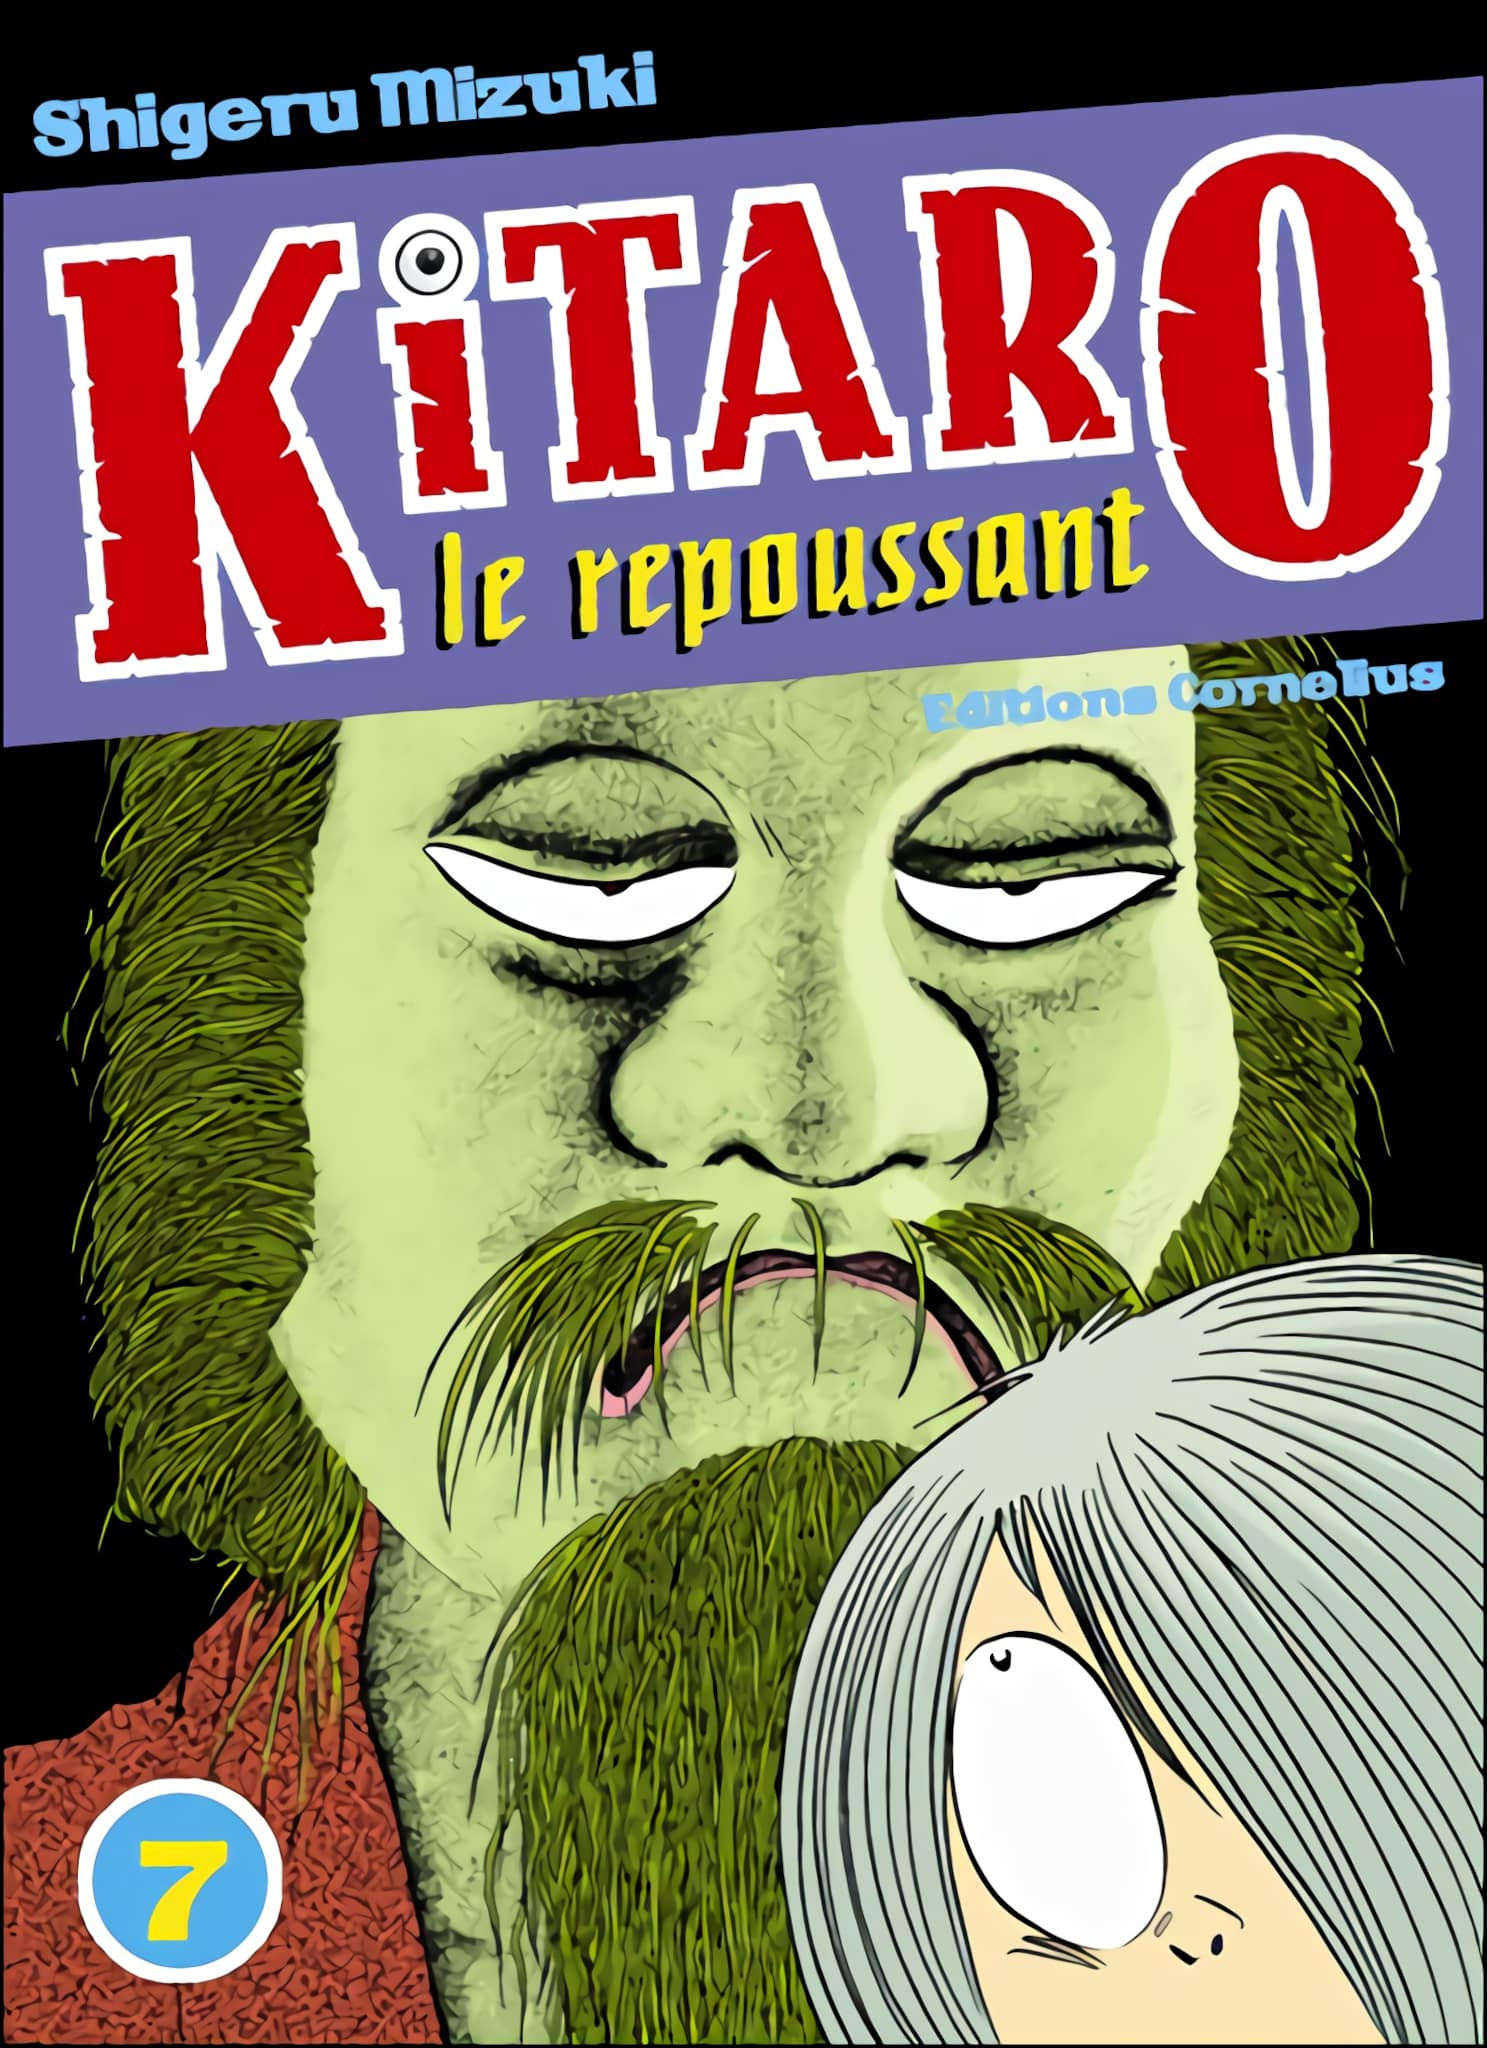 Tome 7 du manga Kitaro le repoussant